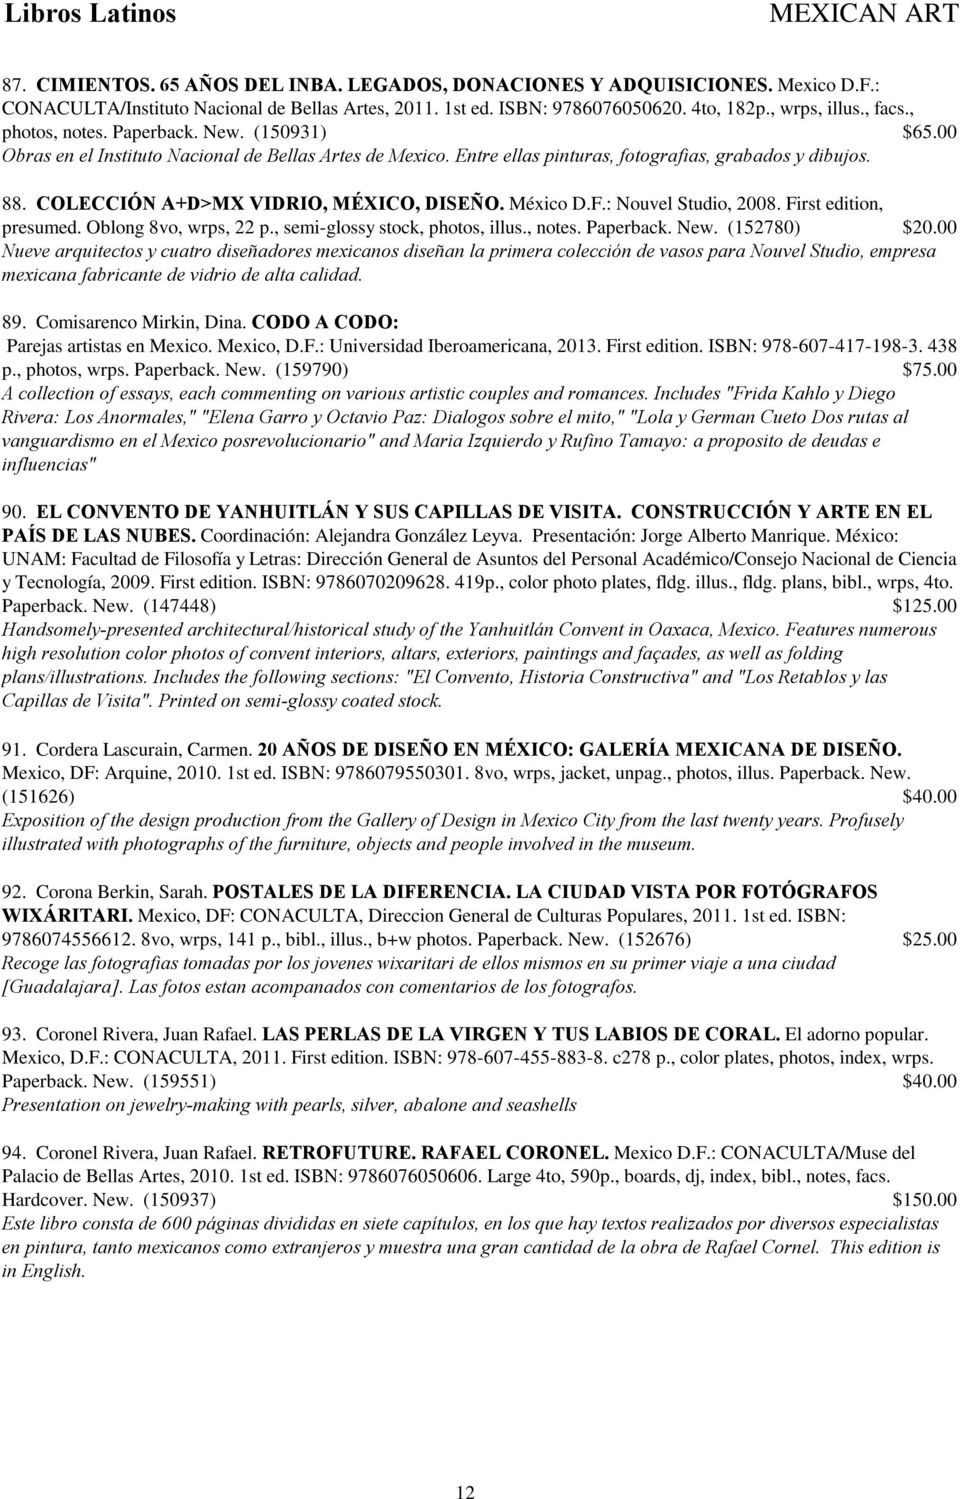 COLECCIÓN A+D>MX VIDRIO, MÉXICO, DISEÑO. México D.F.: Nouvel Studio, 2008. First edition, presumed. Oblong 8vo, wrps, 22 p., semi-glossy stock, photos, illus., notes. Paperback. New. (152780) $20.